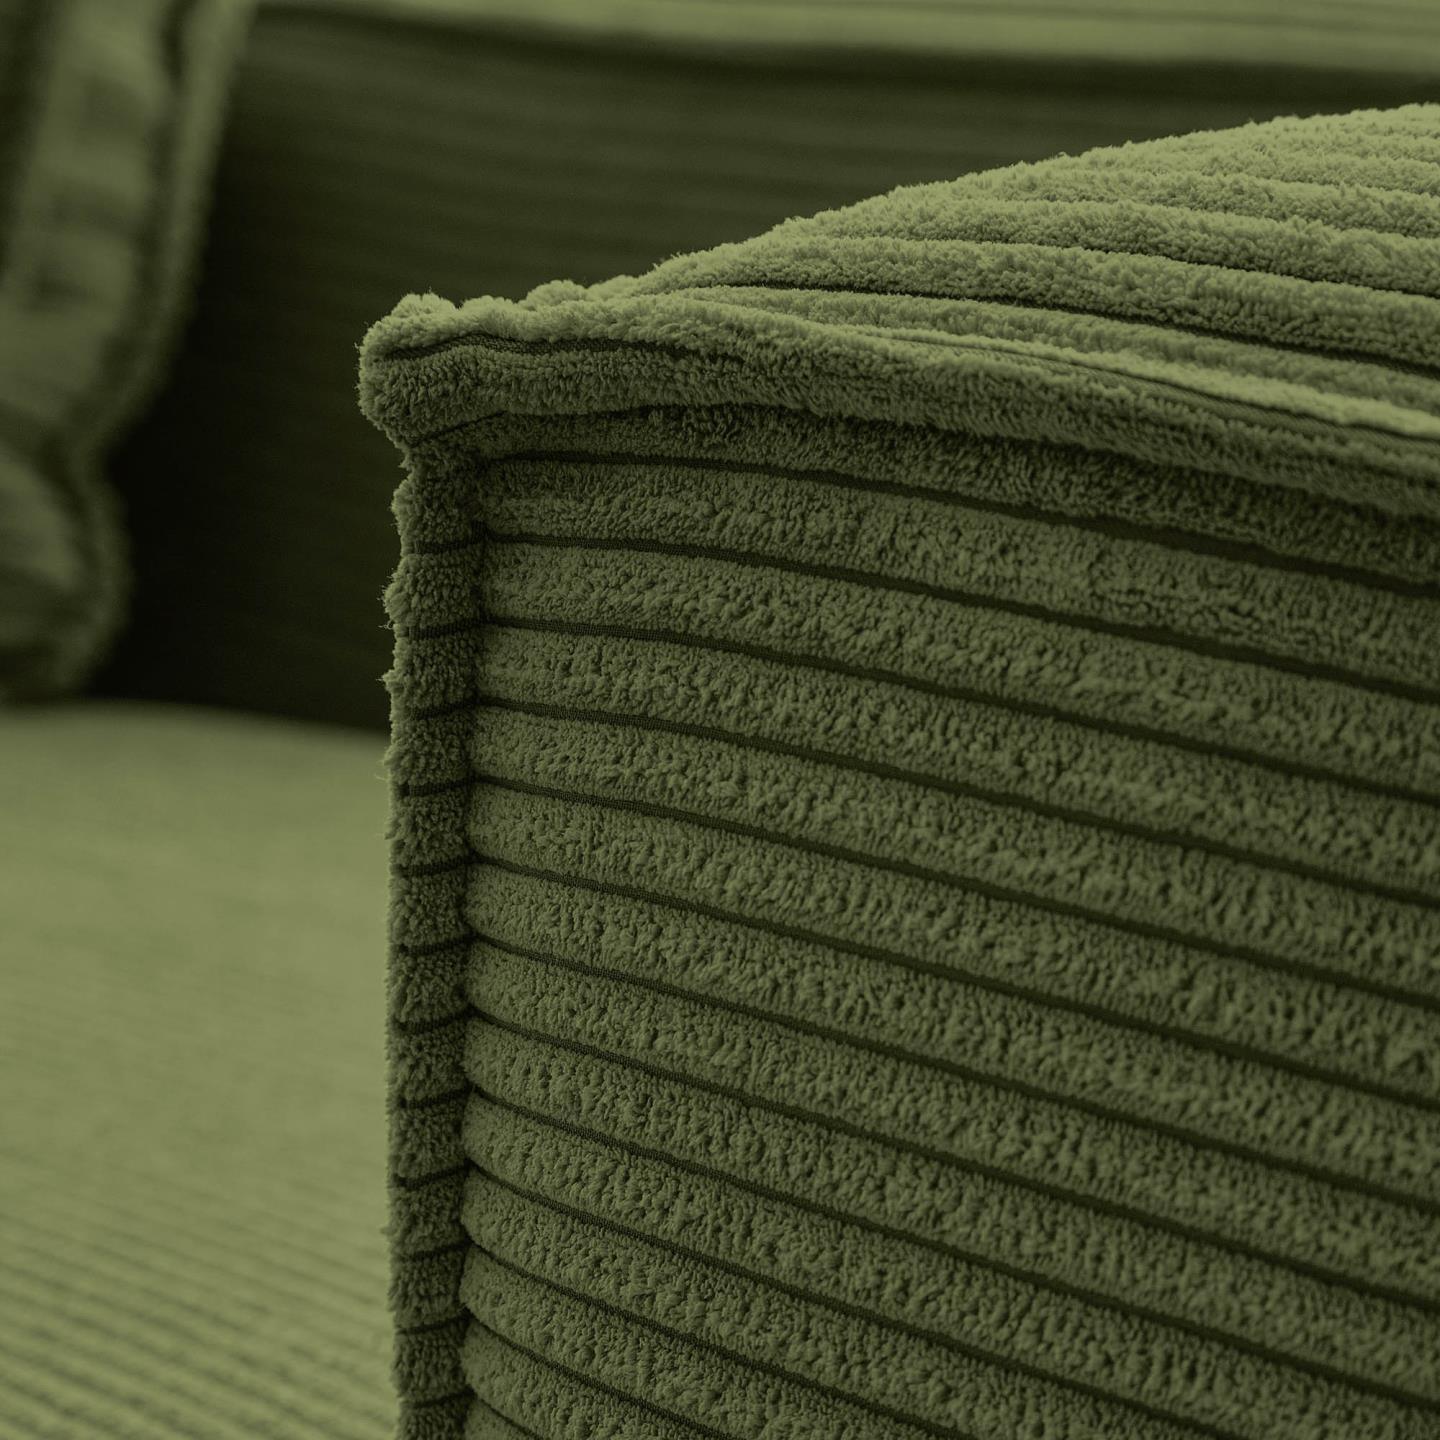 Sofa 3-osobowa BLOK zielony sztruks La Forma    Eye on Design